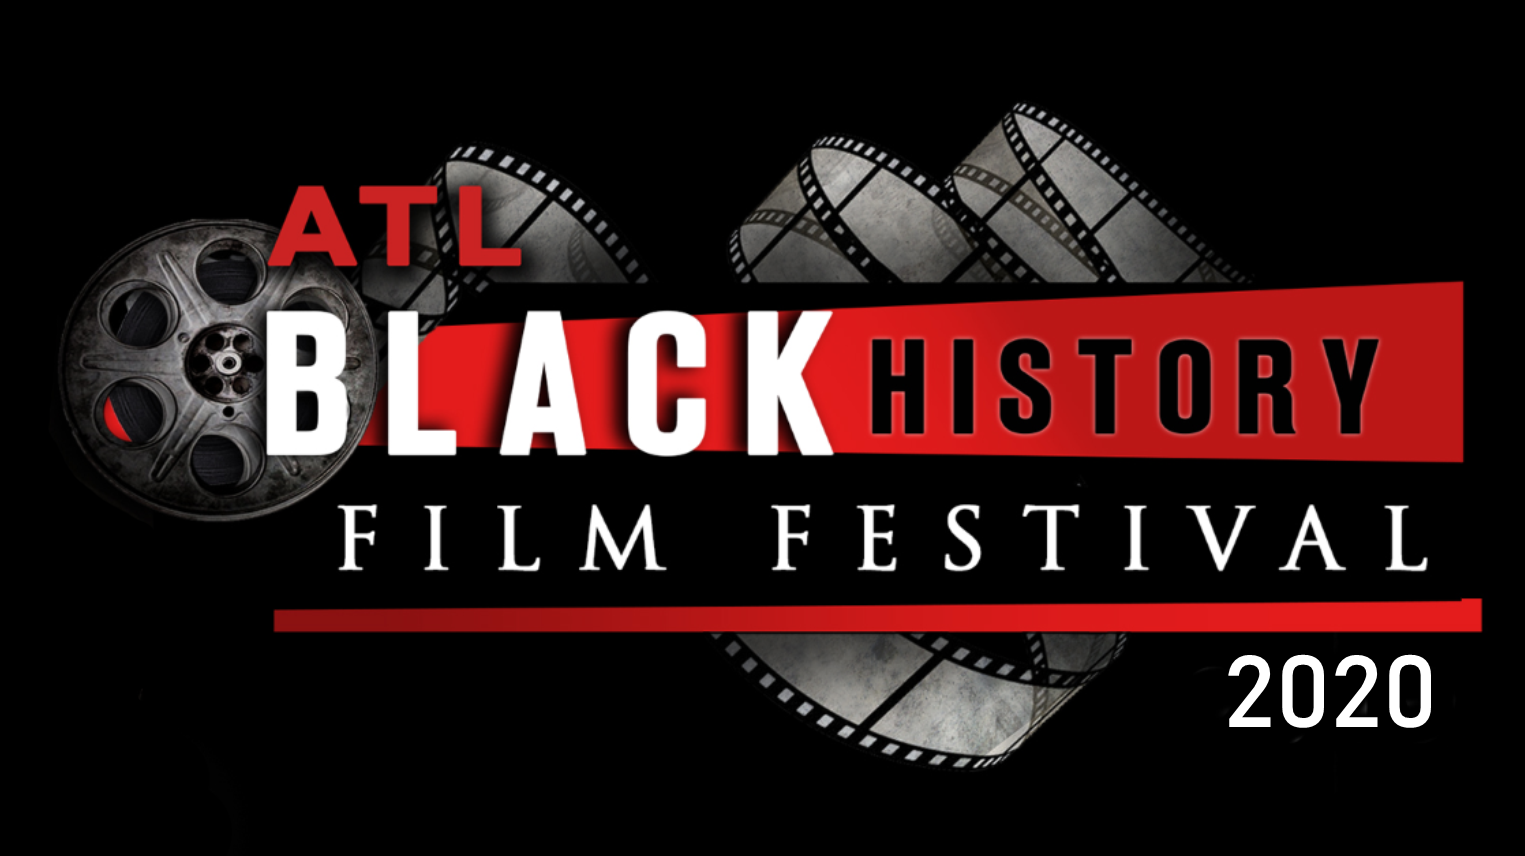 Black History Film Festival with film reel 